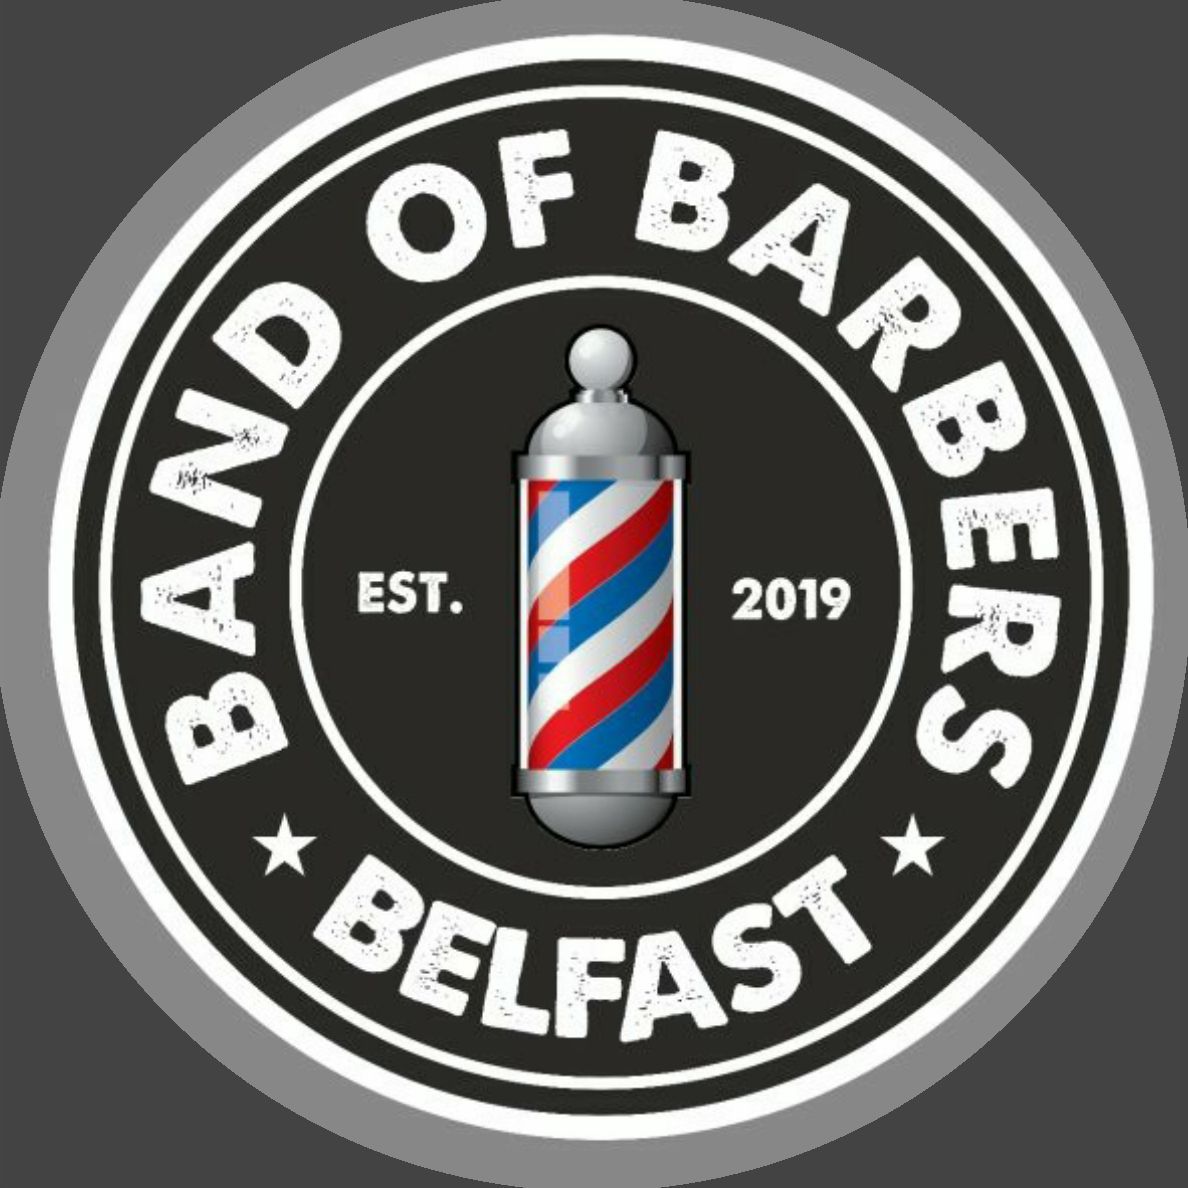 Band Of Barbers Belfast, Ballysillan Road, 421, BT14 6RE, Belfast